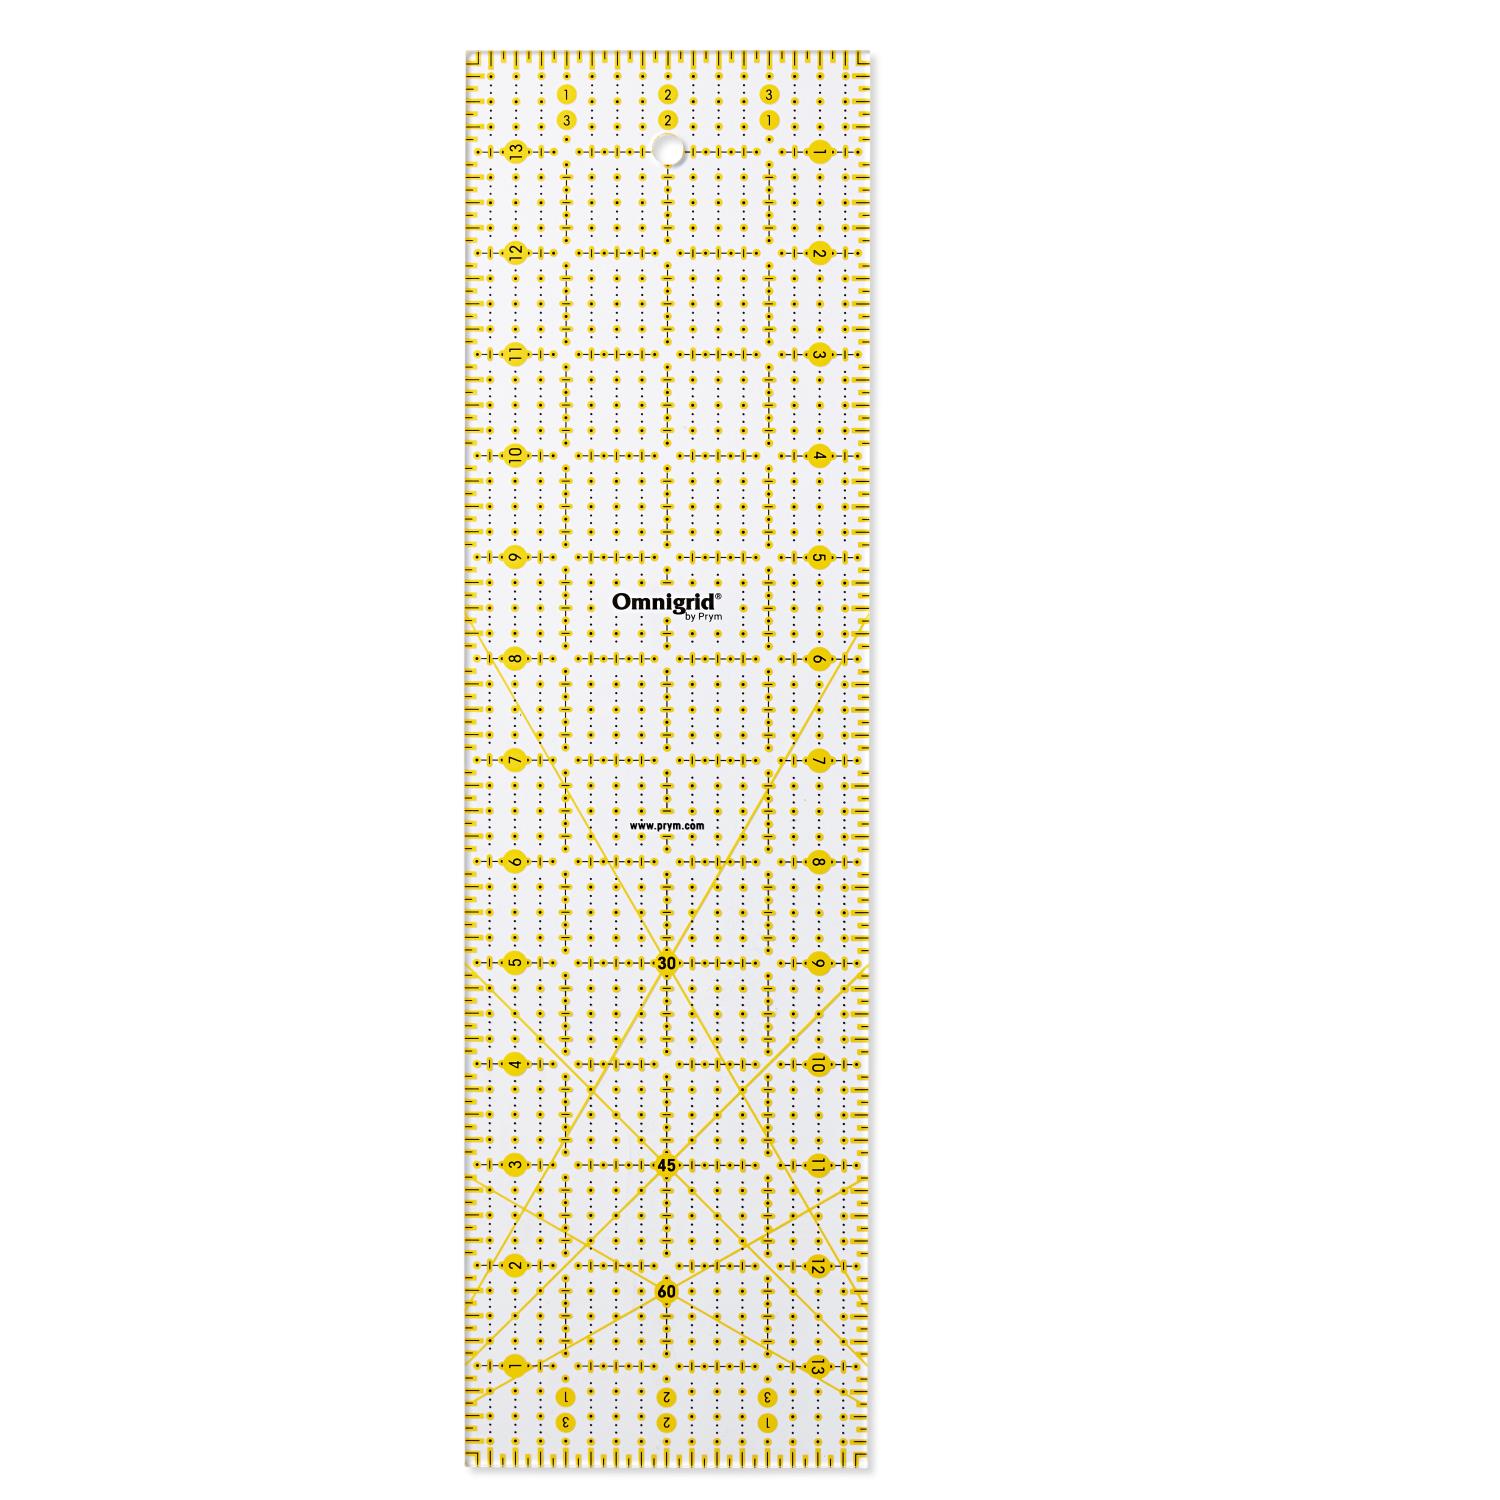 Universal ruler, 4x14 inch grid